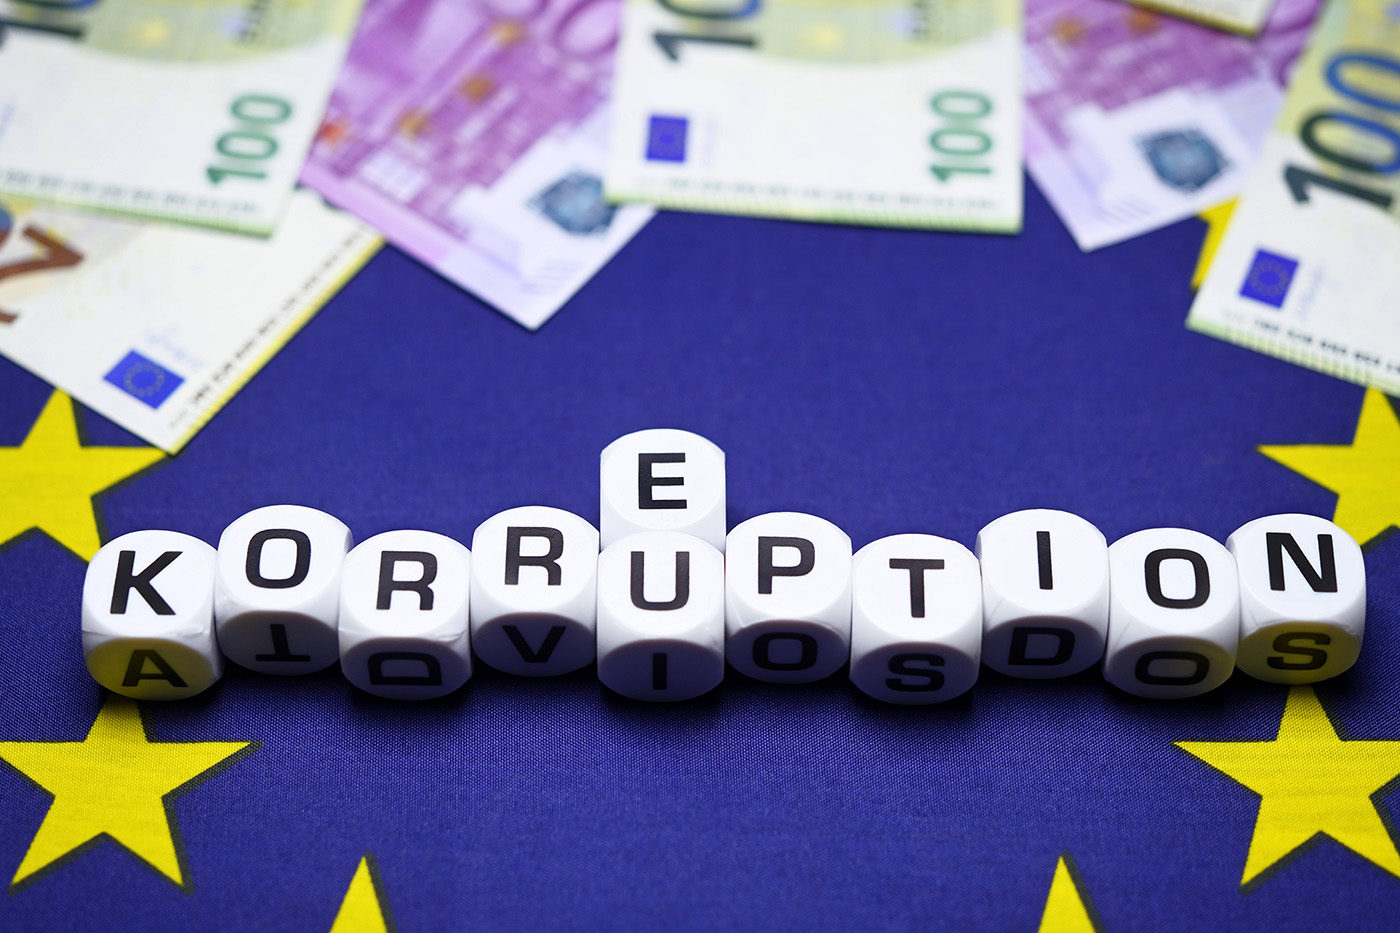 Korruptionsskandal erschüttert die EU - lies hier den Beitrag von LobbyControl im Campact-Blog